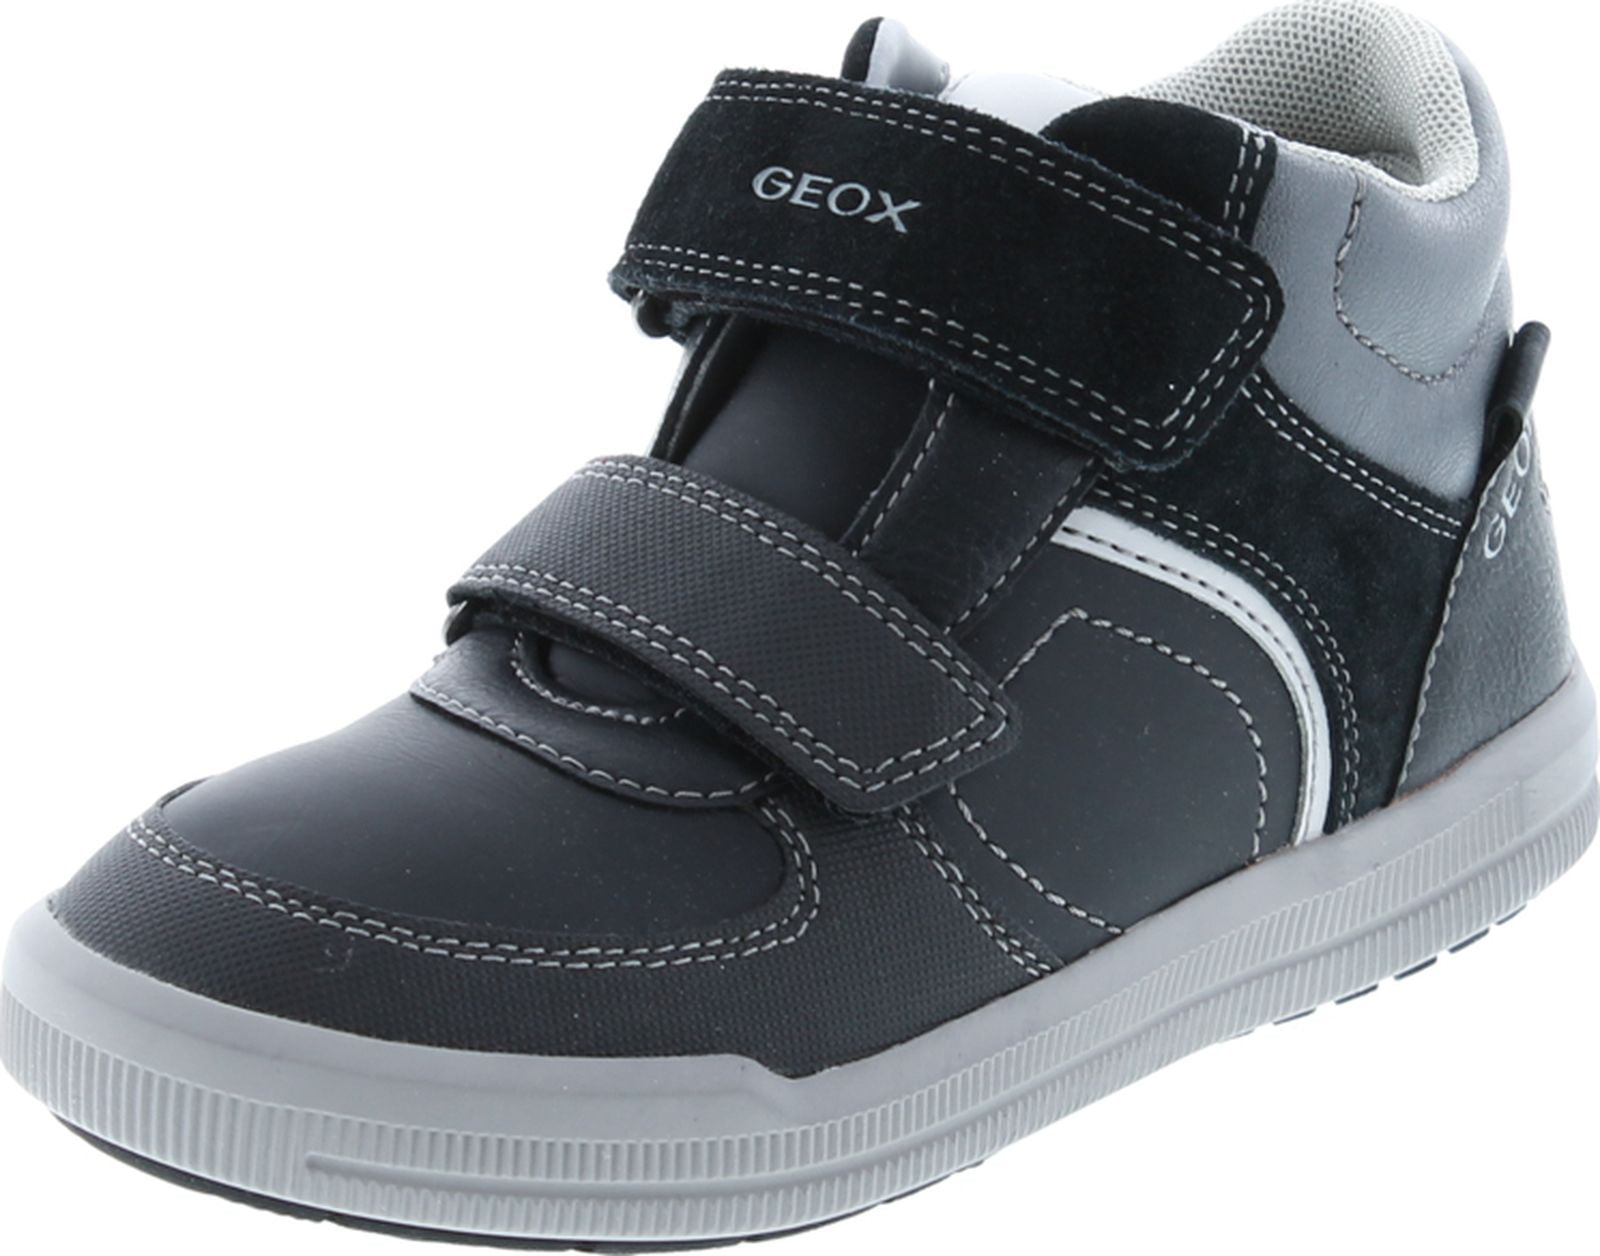 Doe voorzichtig medley tand Geox Boys Junior Arzach Fashiona Boots, Black/Dark Grey, 39 - Walmart.com